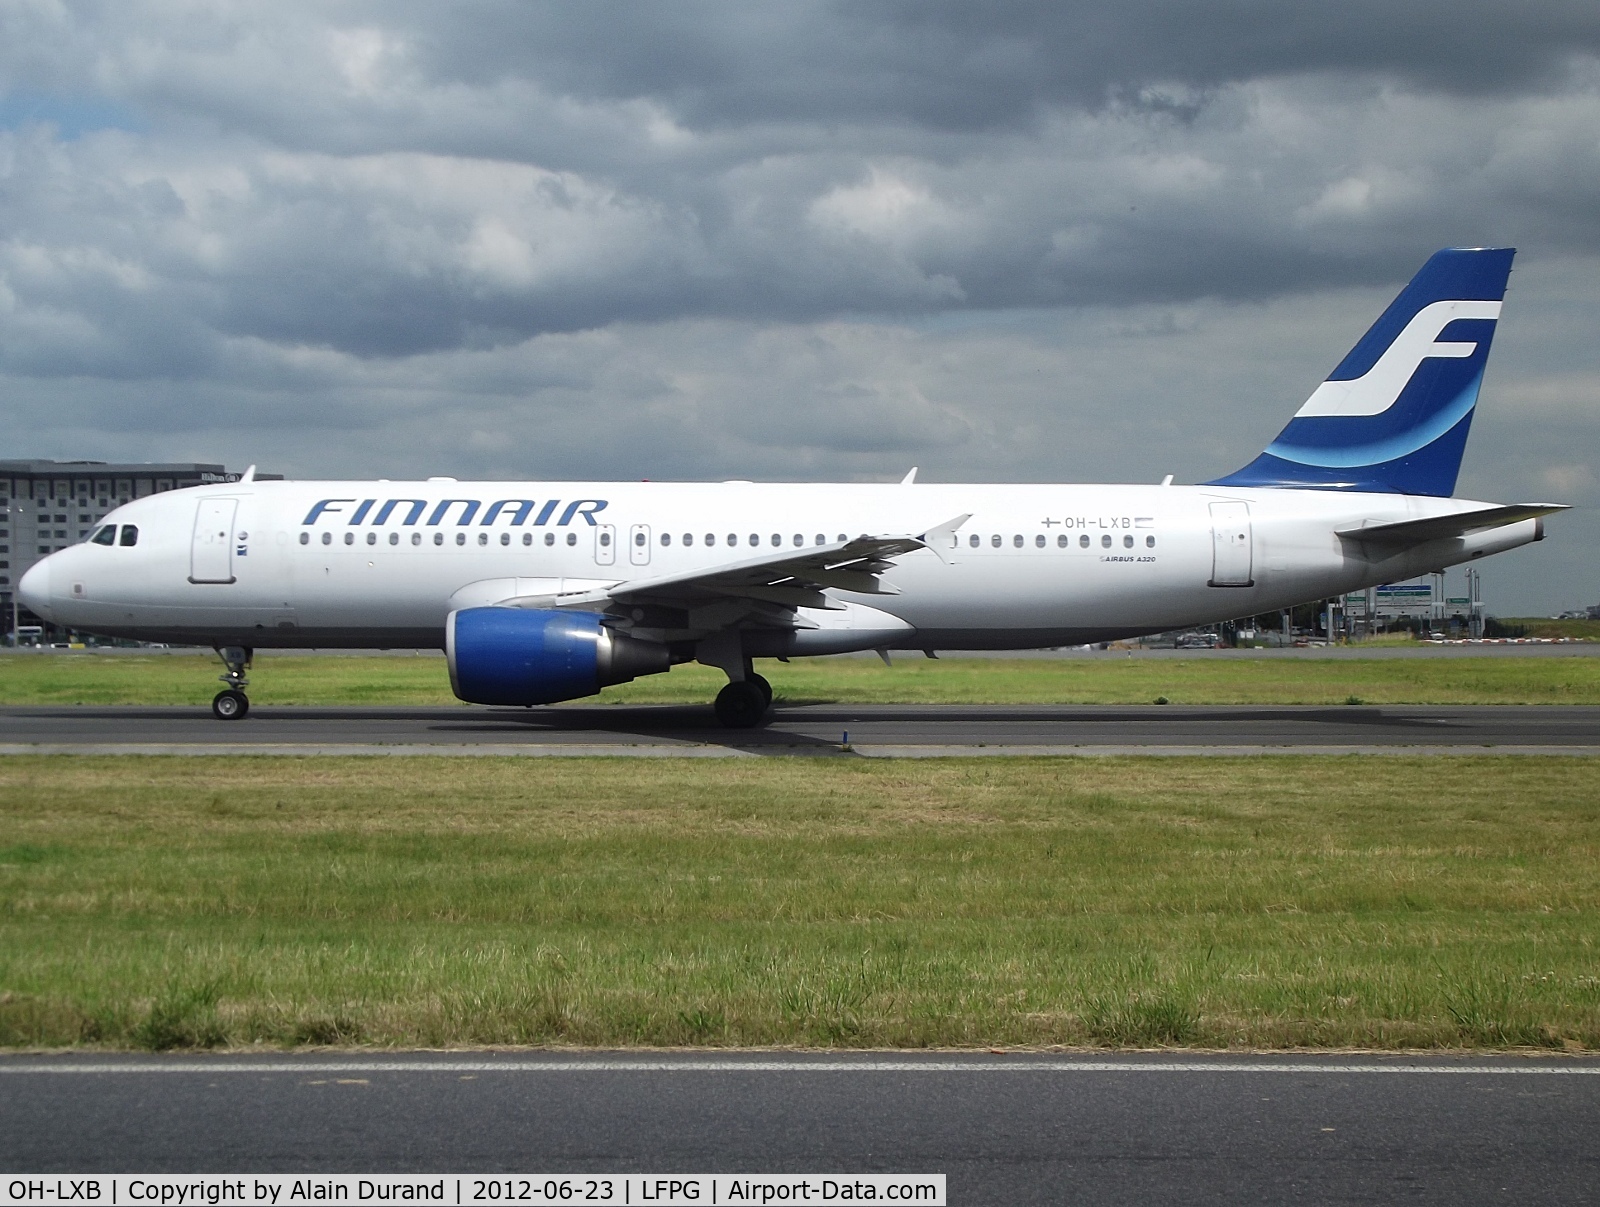 OH-LXB, 2001 Airbus A320-214 C/N 1470, CY150, property of Finnair Aircraft Finance Ltd.